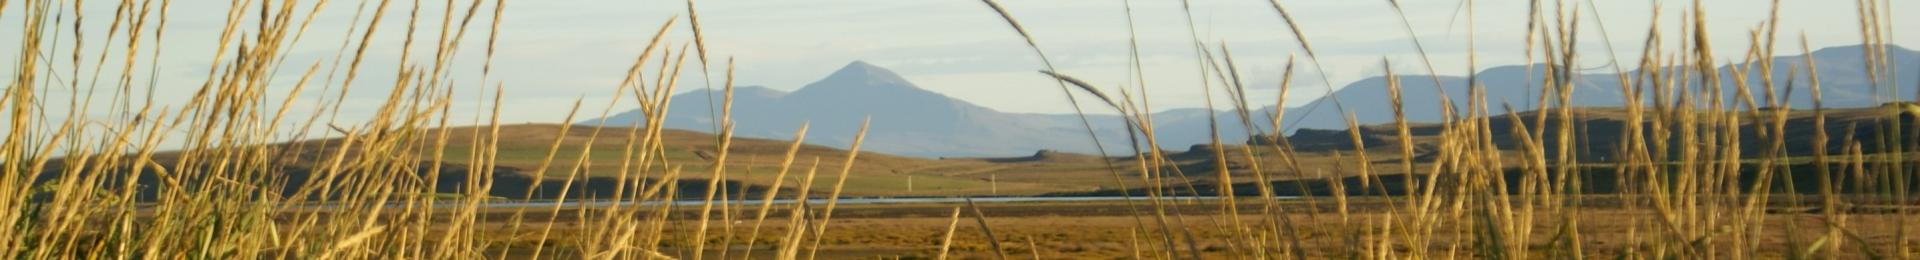 Iceland mountains